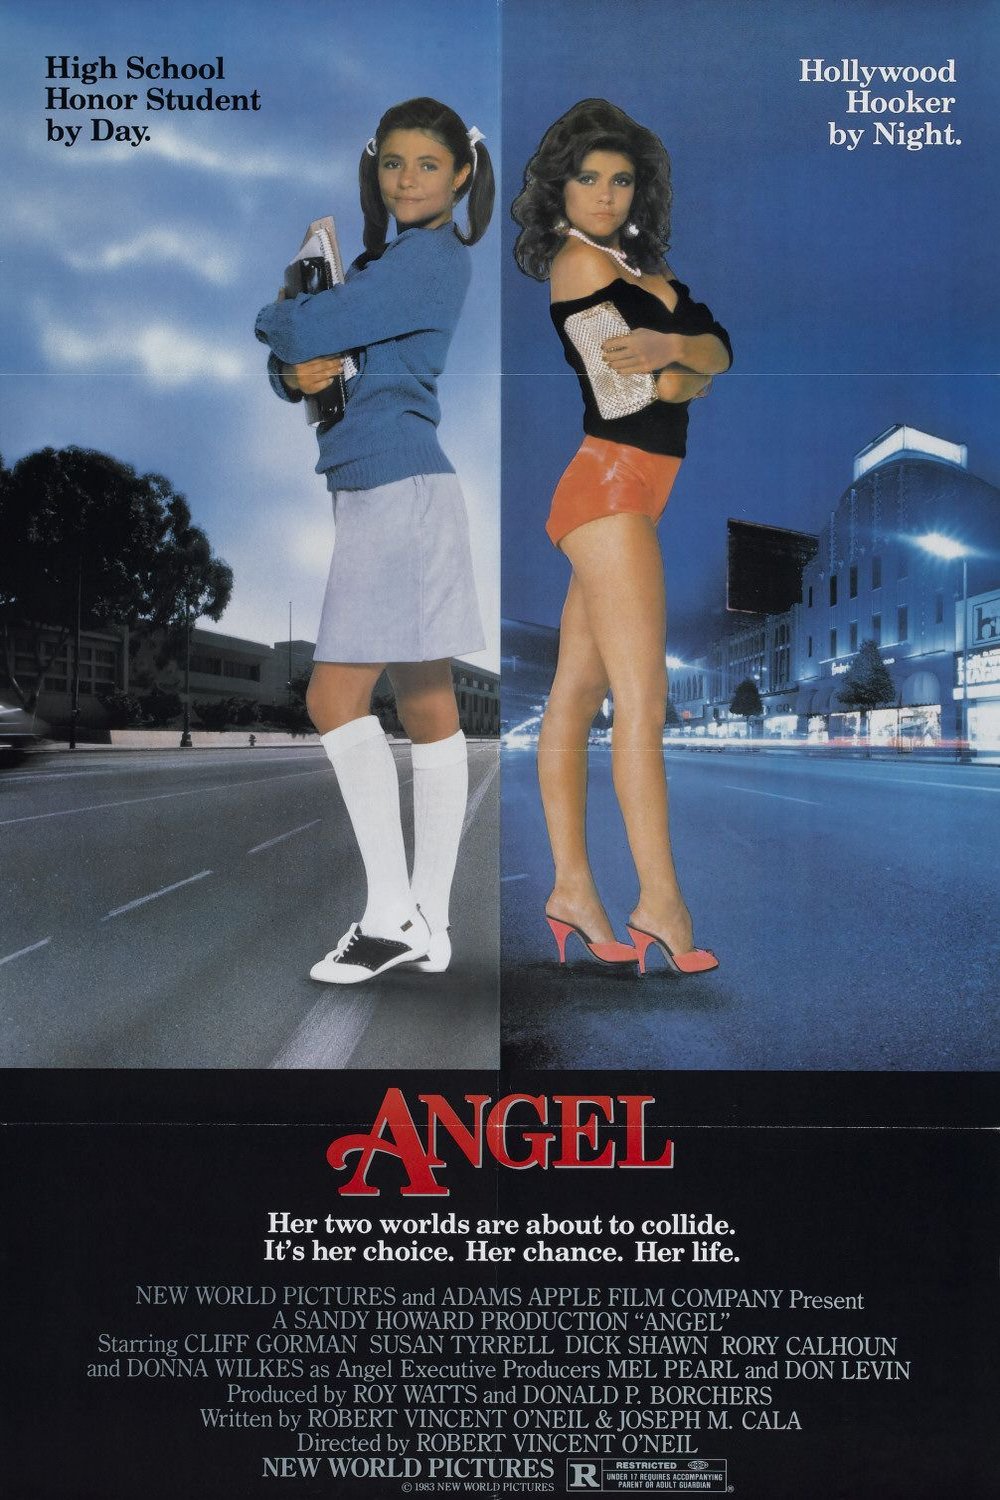 L'affiche du film Angel